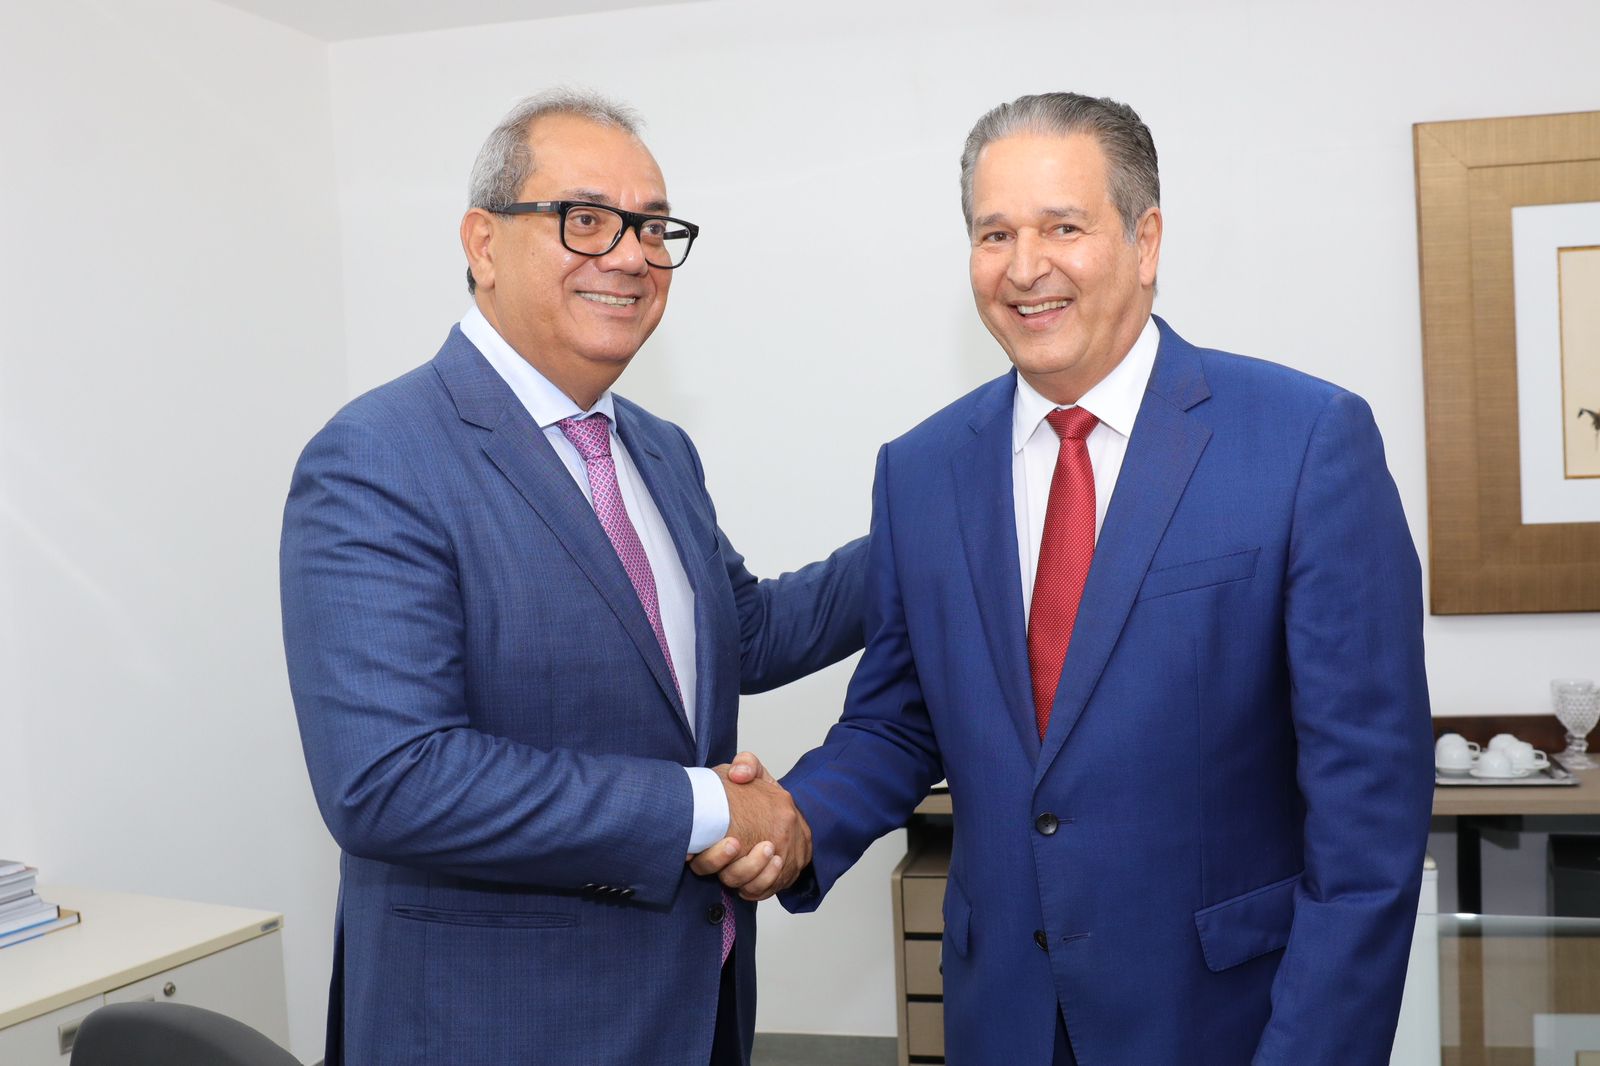 Carlos Muniz visita os presidentes do TRE e TJ-BA visando fortalecer a democracia